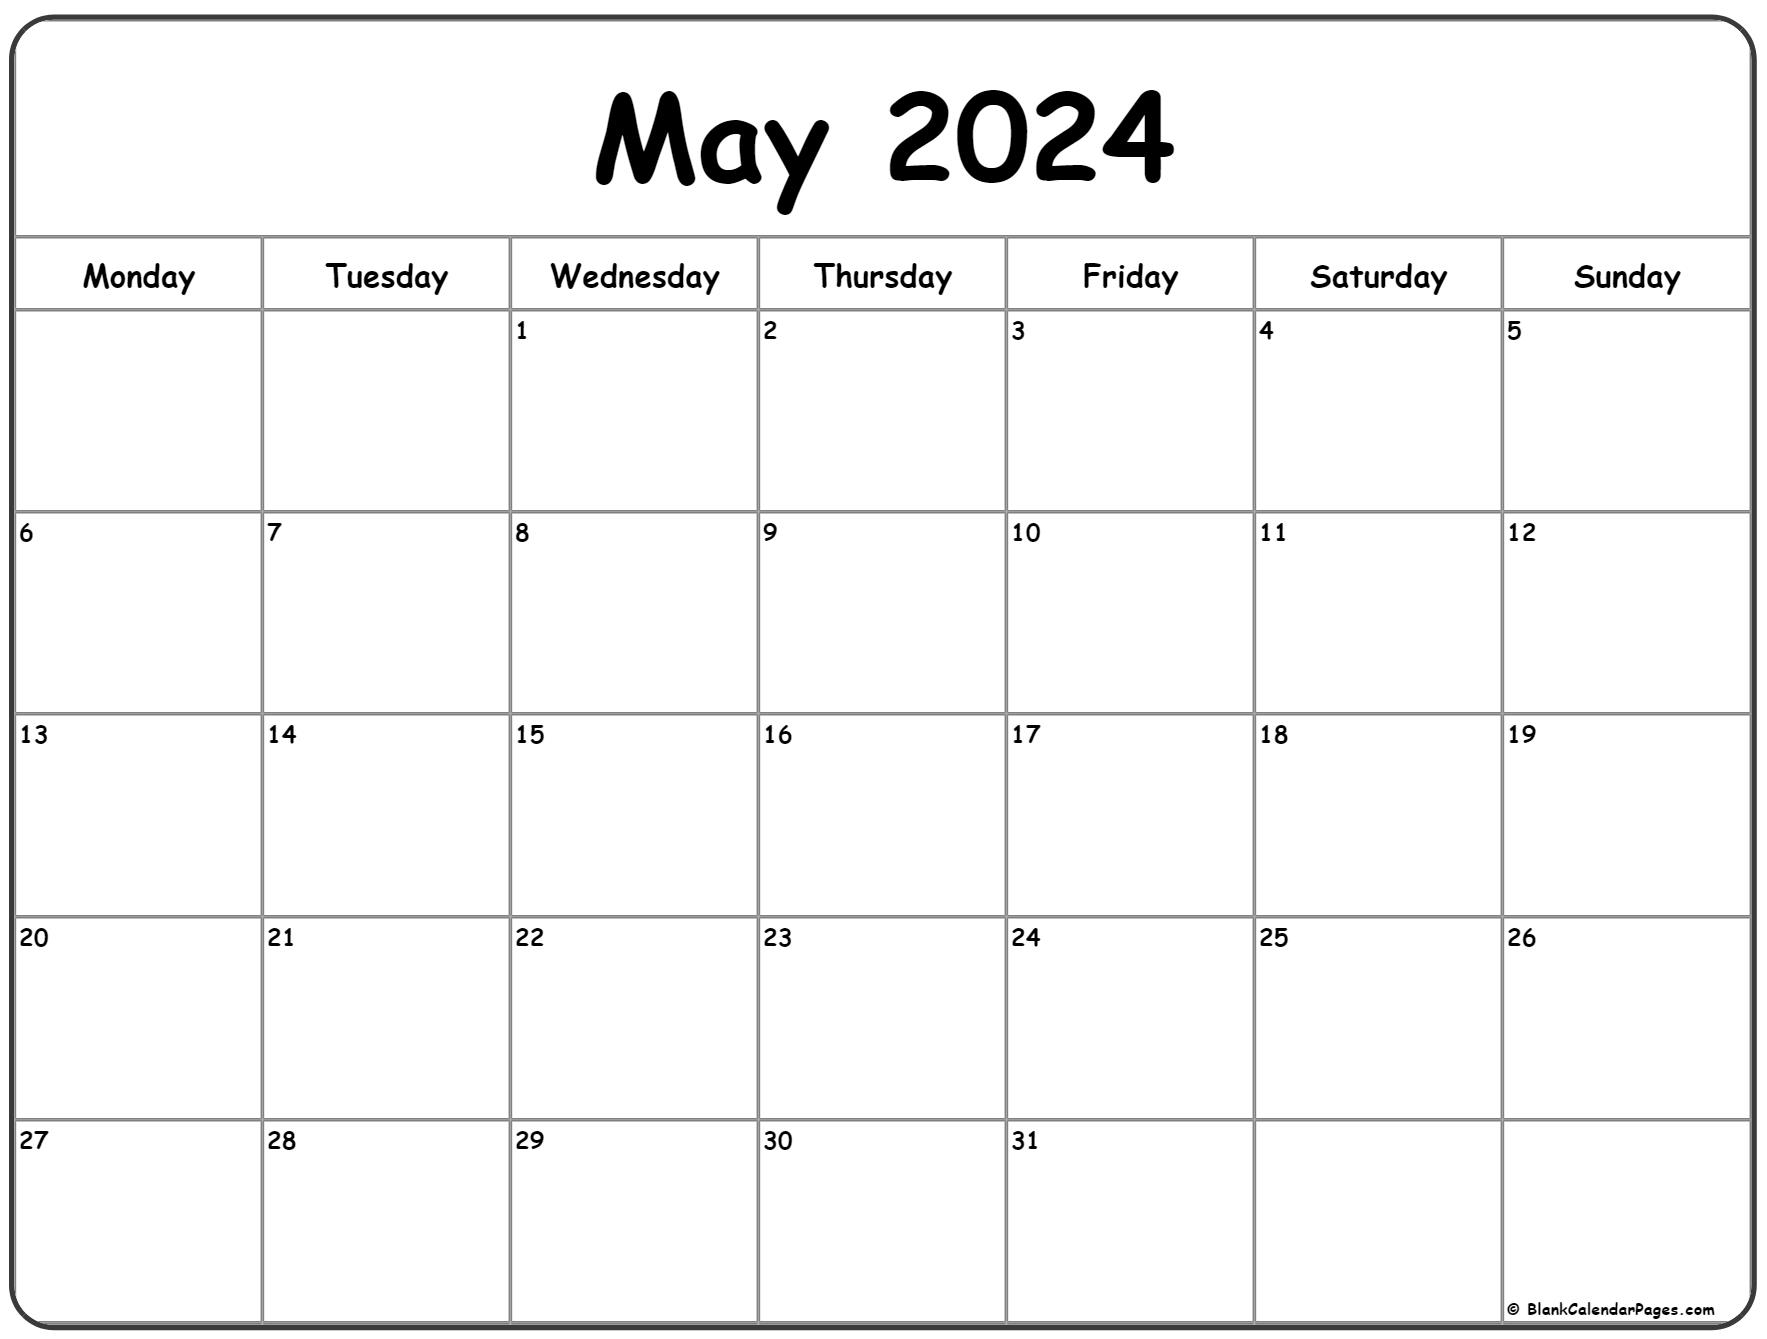 May 2024 Monday calendar. Monday to Sunday